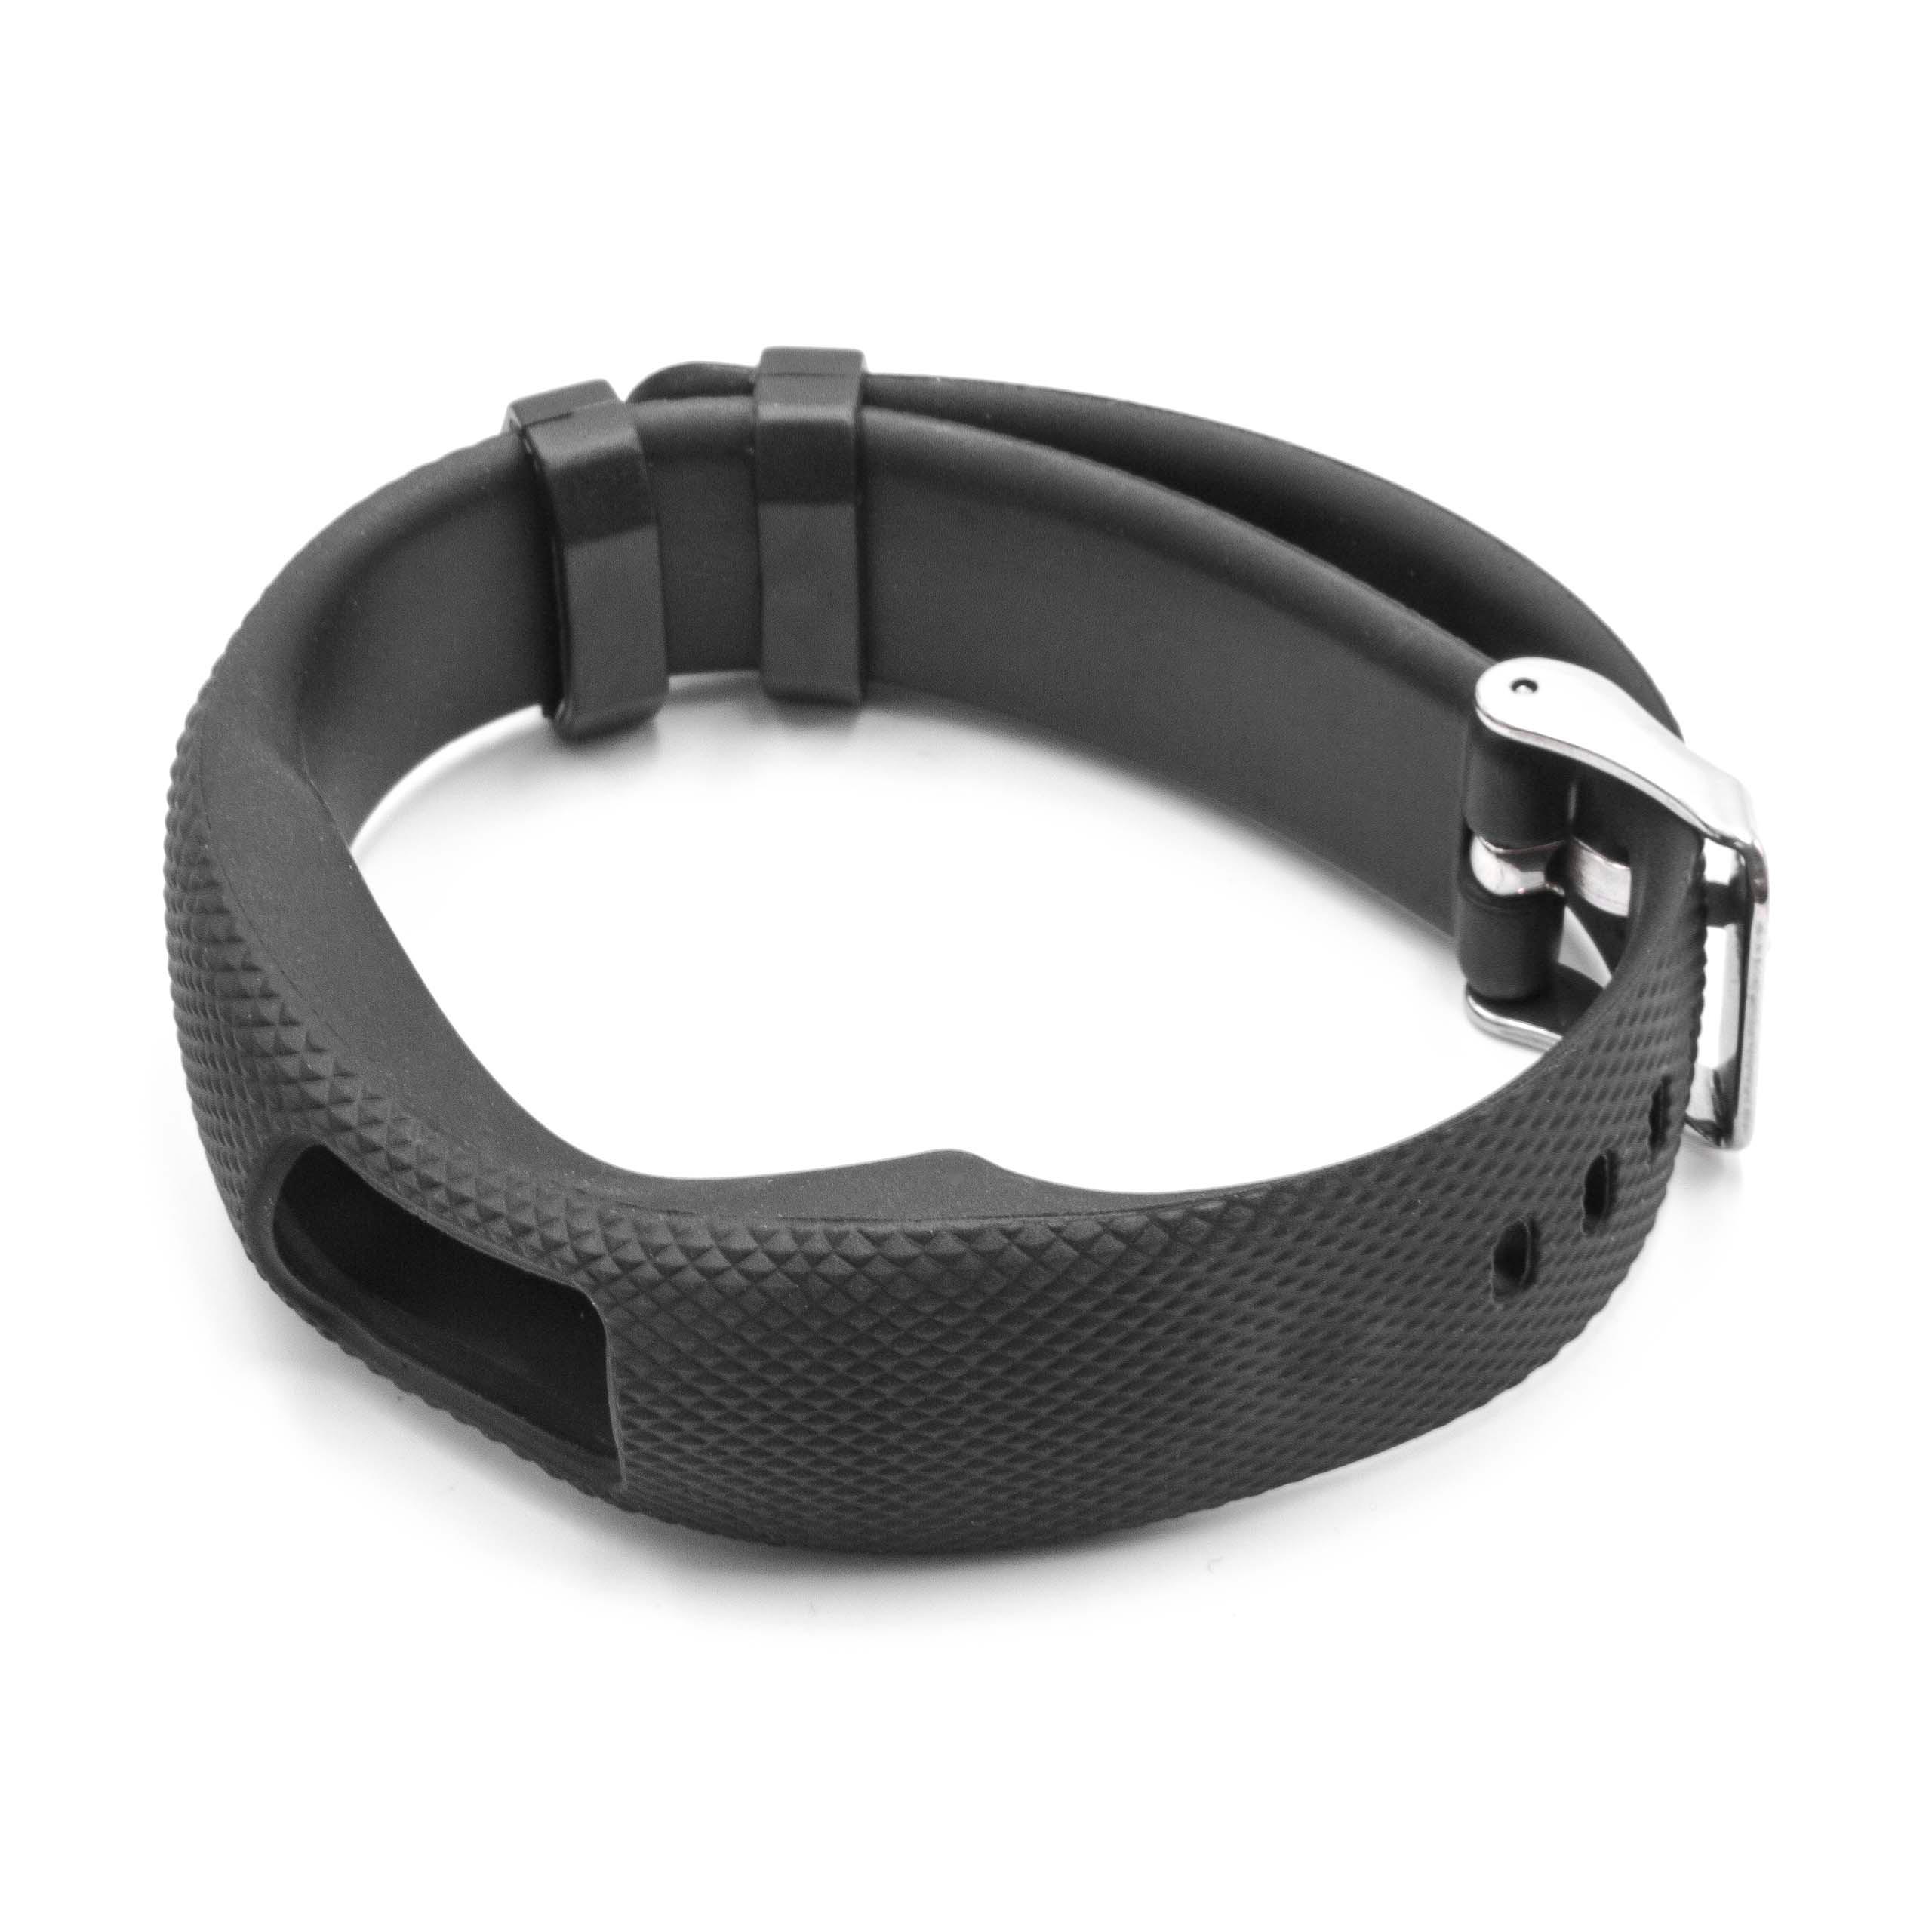 wristband for Garmin Vivofit Smartwatch - 24.5 cm long, 19.5mm wide, black